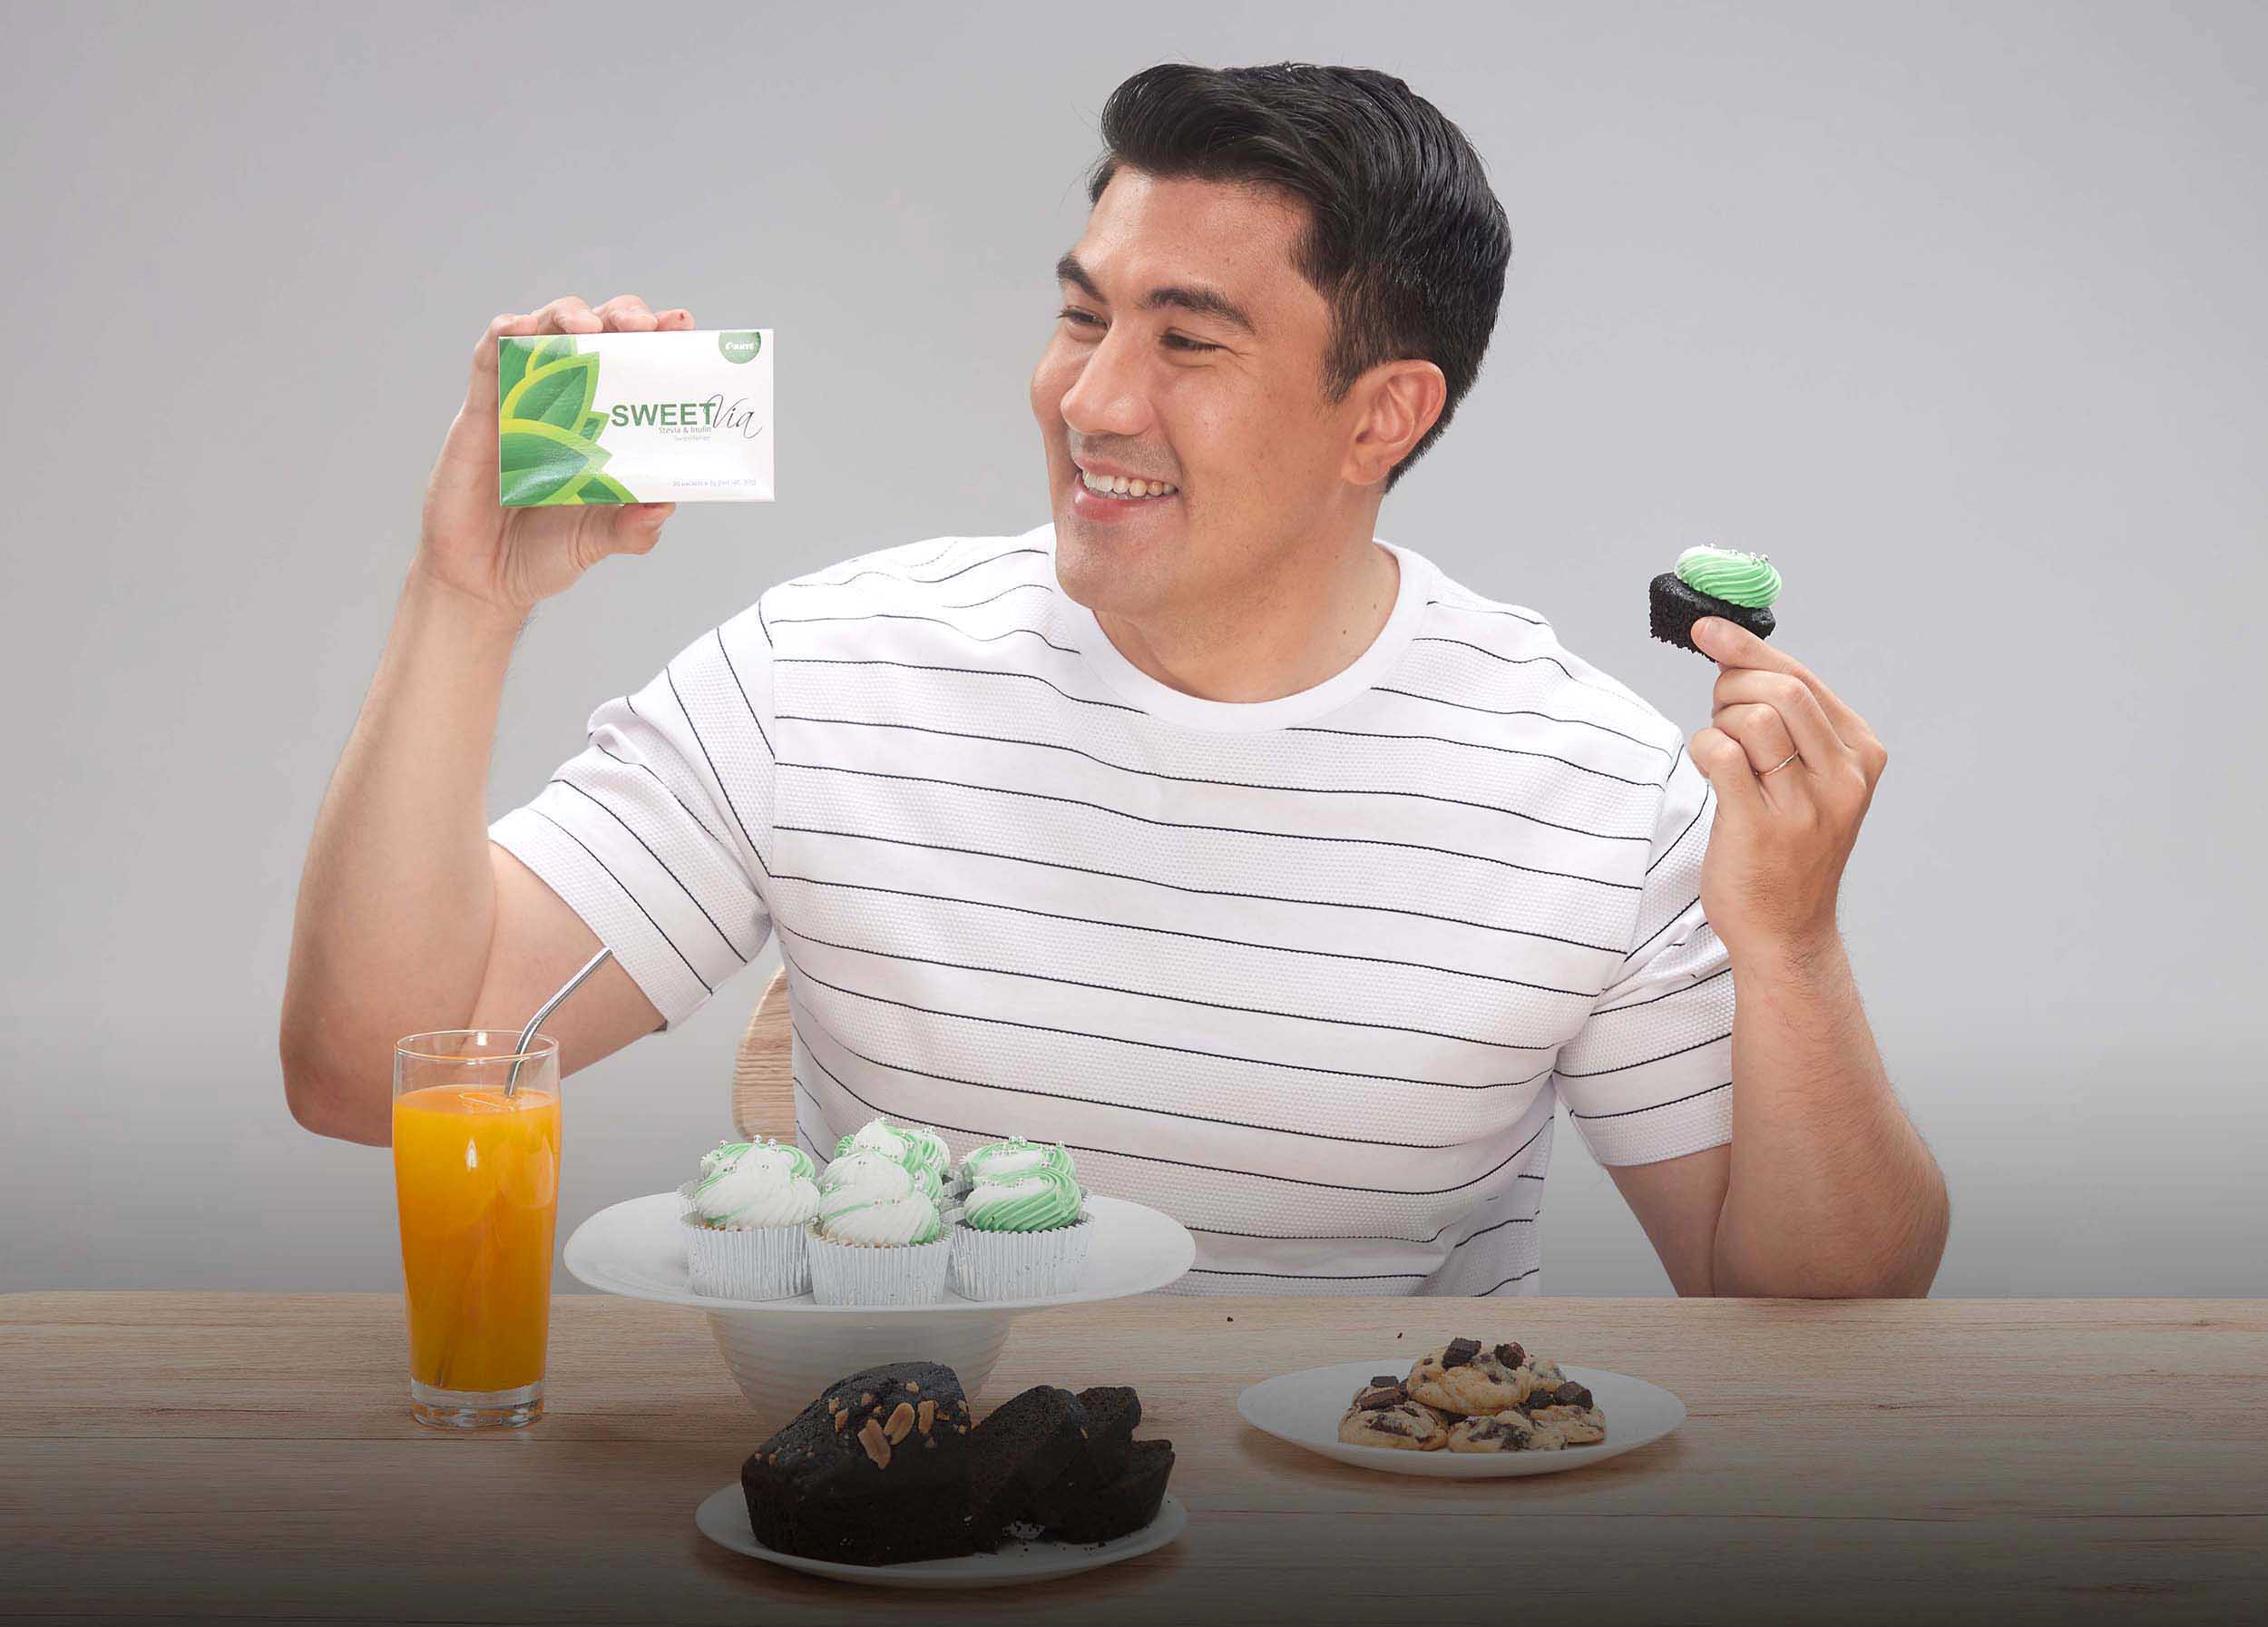 SweetVia welcomes Luis Manzano as its newest brand ambassador